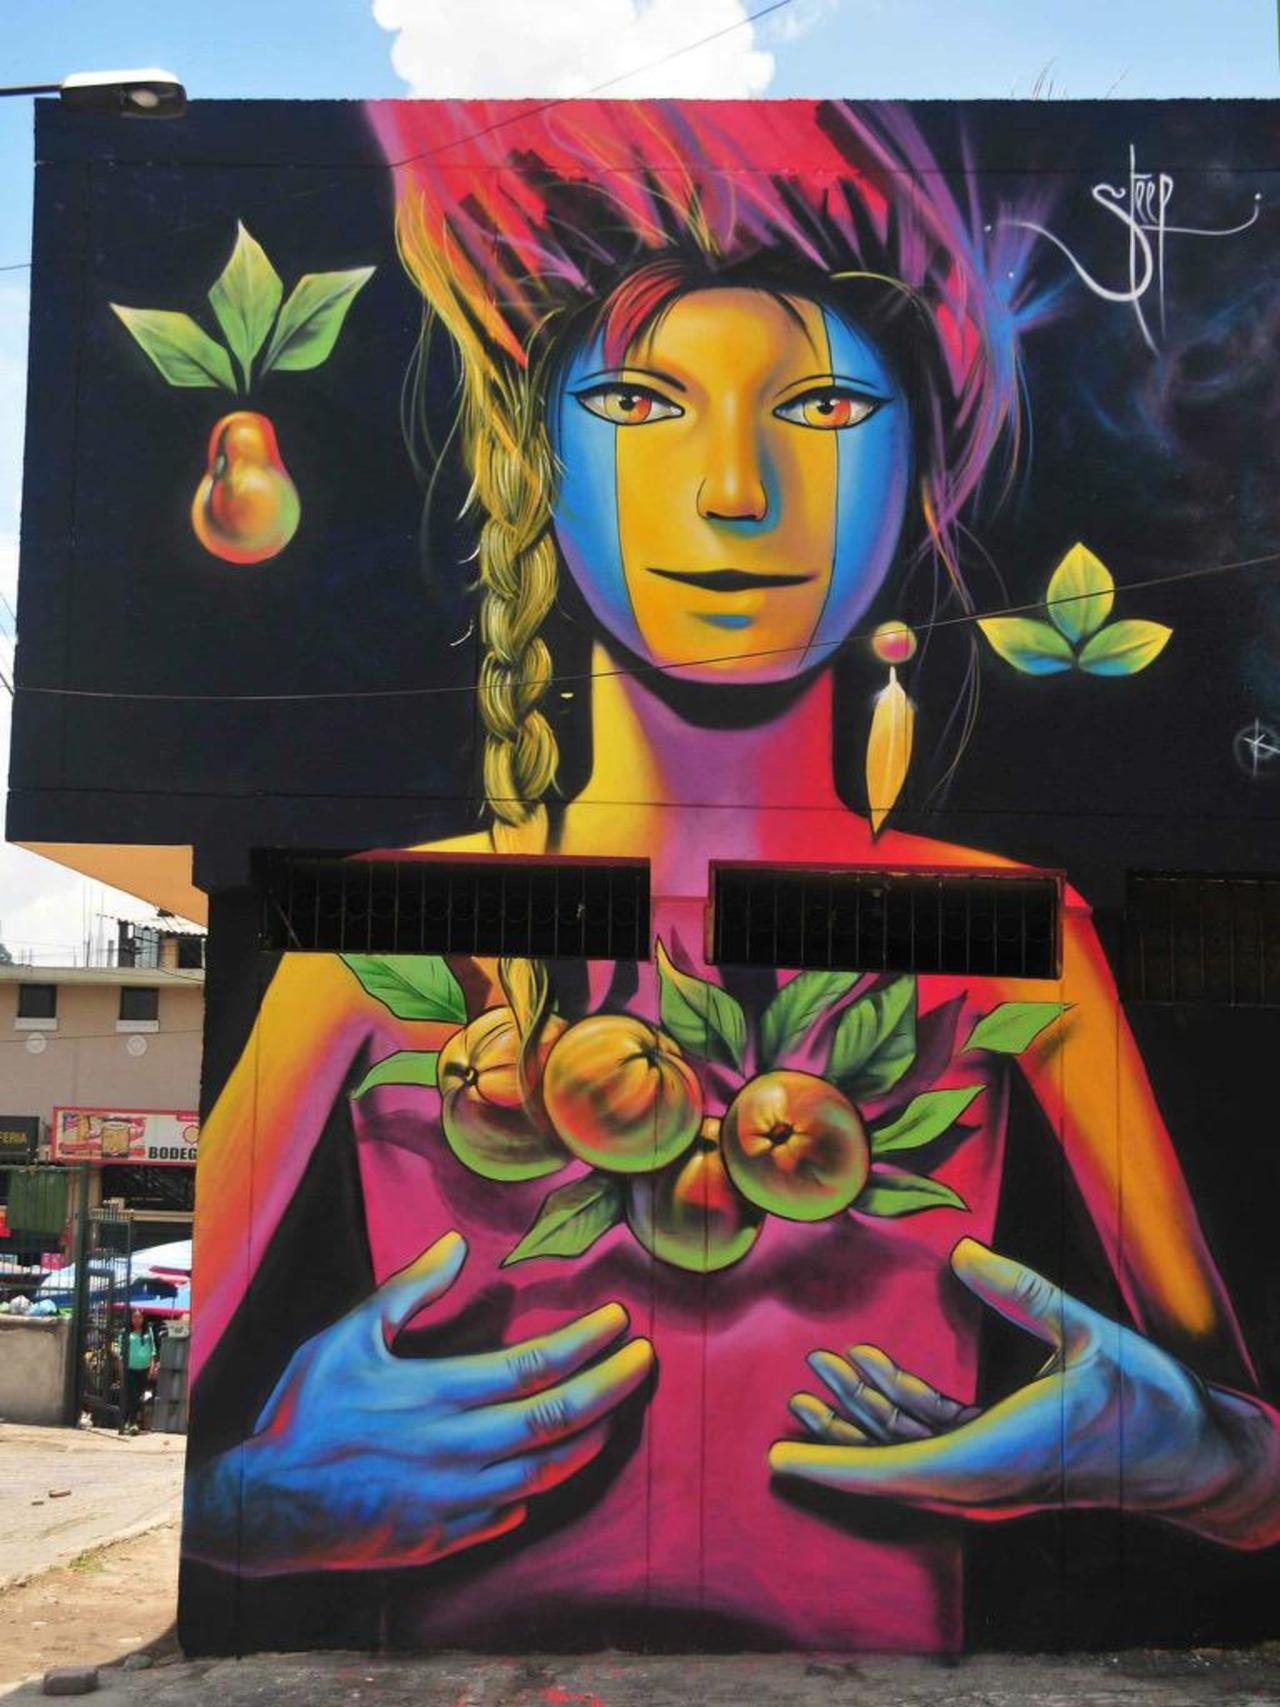 Street Art by Steep

#art #graffiti #mural #streetart http://t.co/ElDnyUmcDM